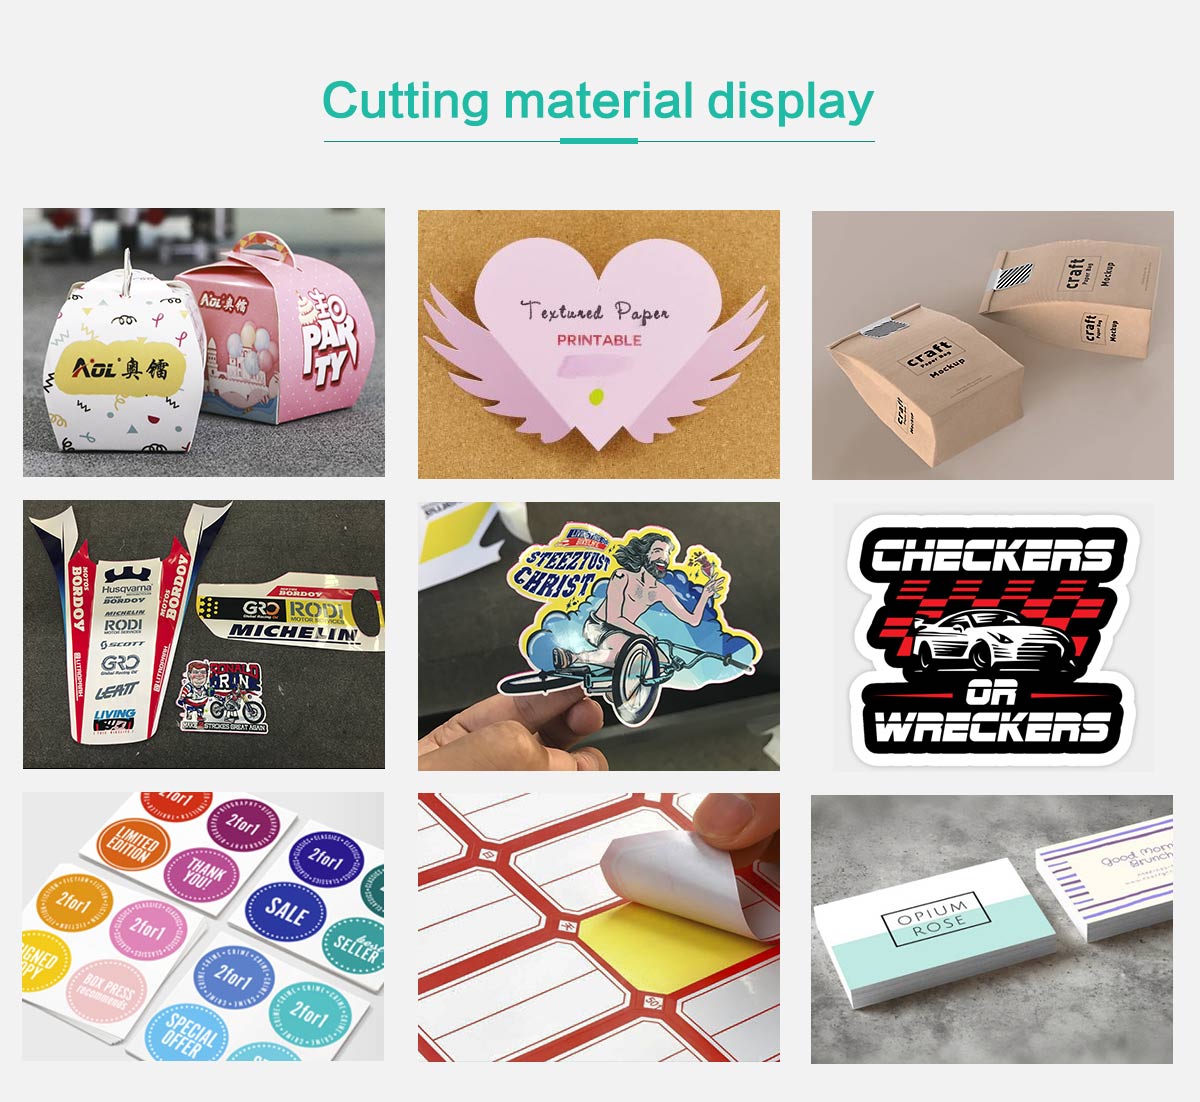 Cutting materials display